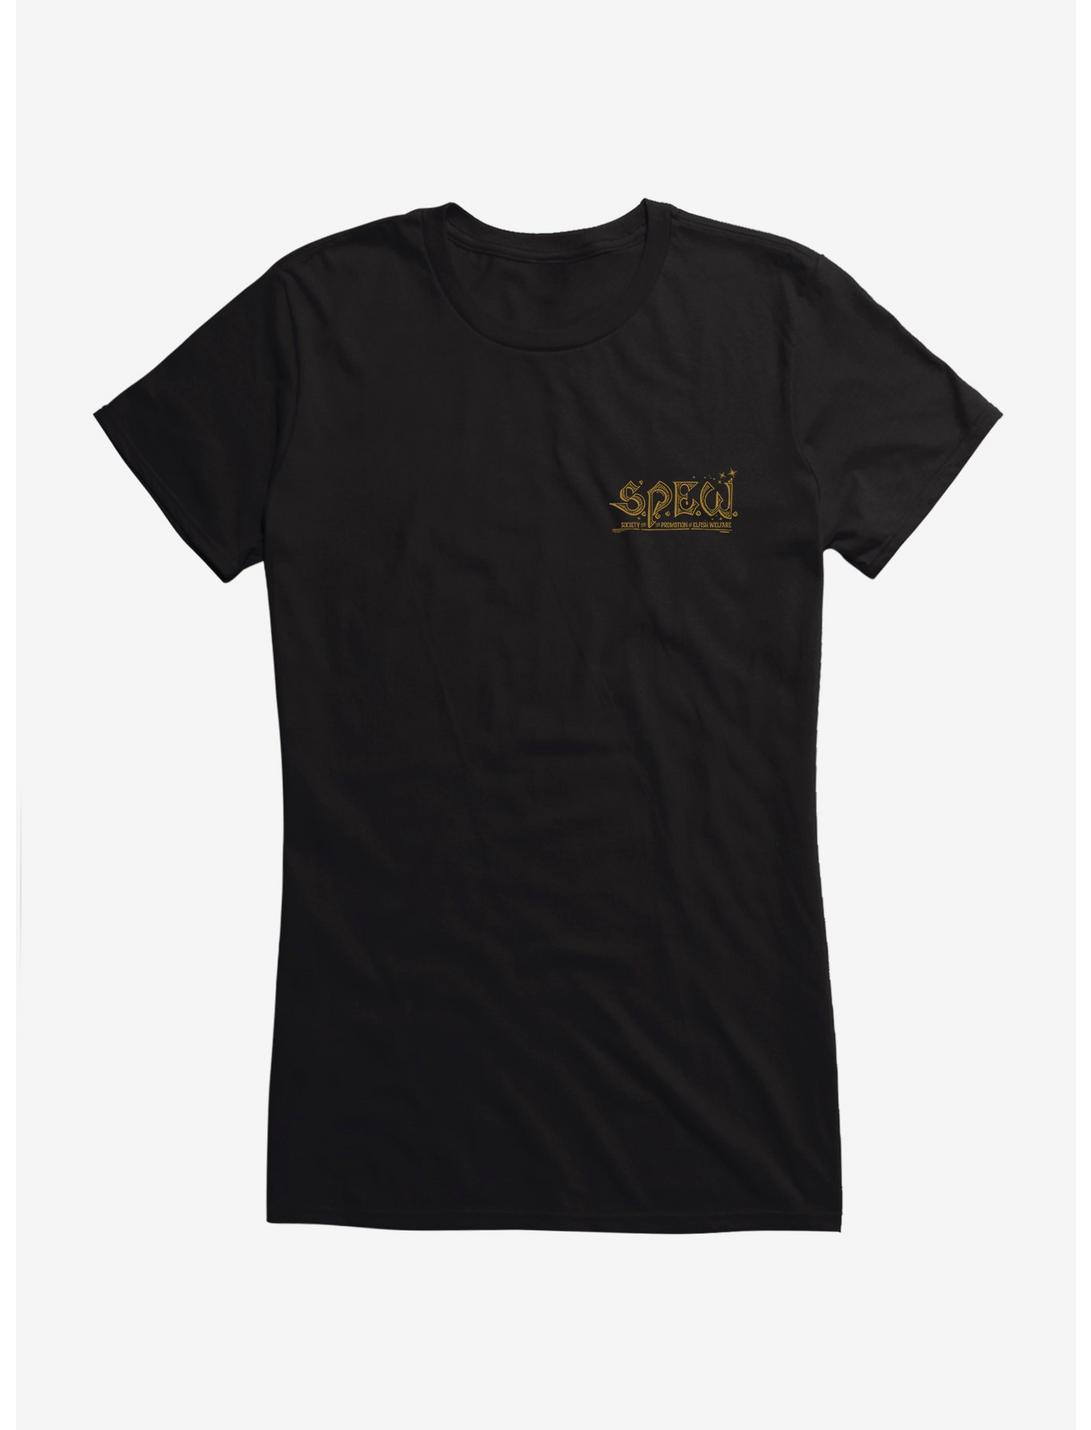 Harry Potter SPEW Organization Gold Text Girls T-Shirt, BLACK, hi-res